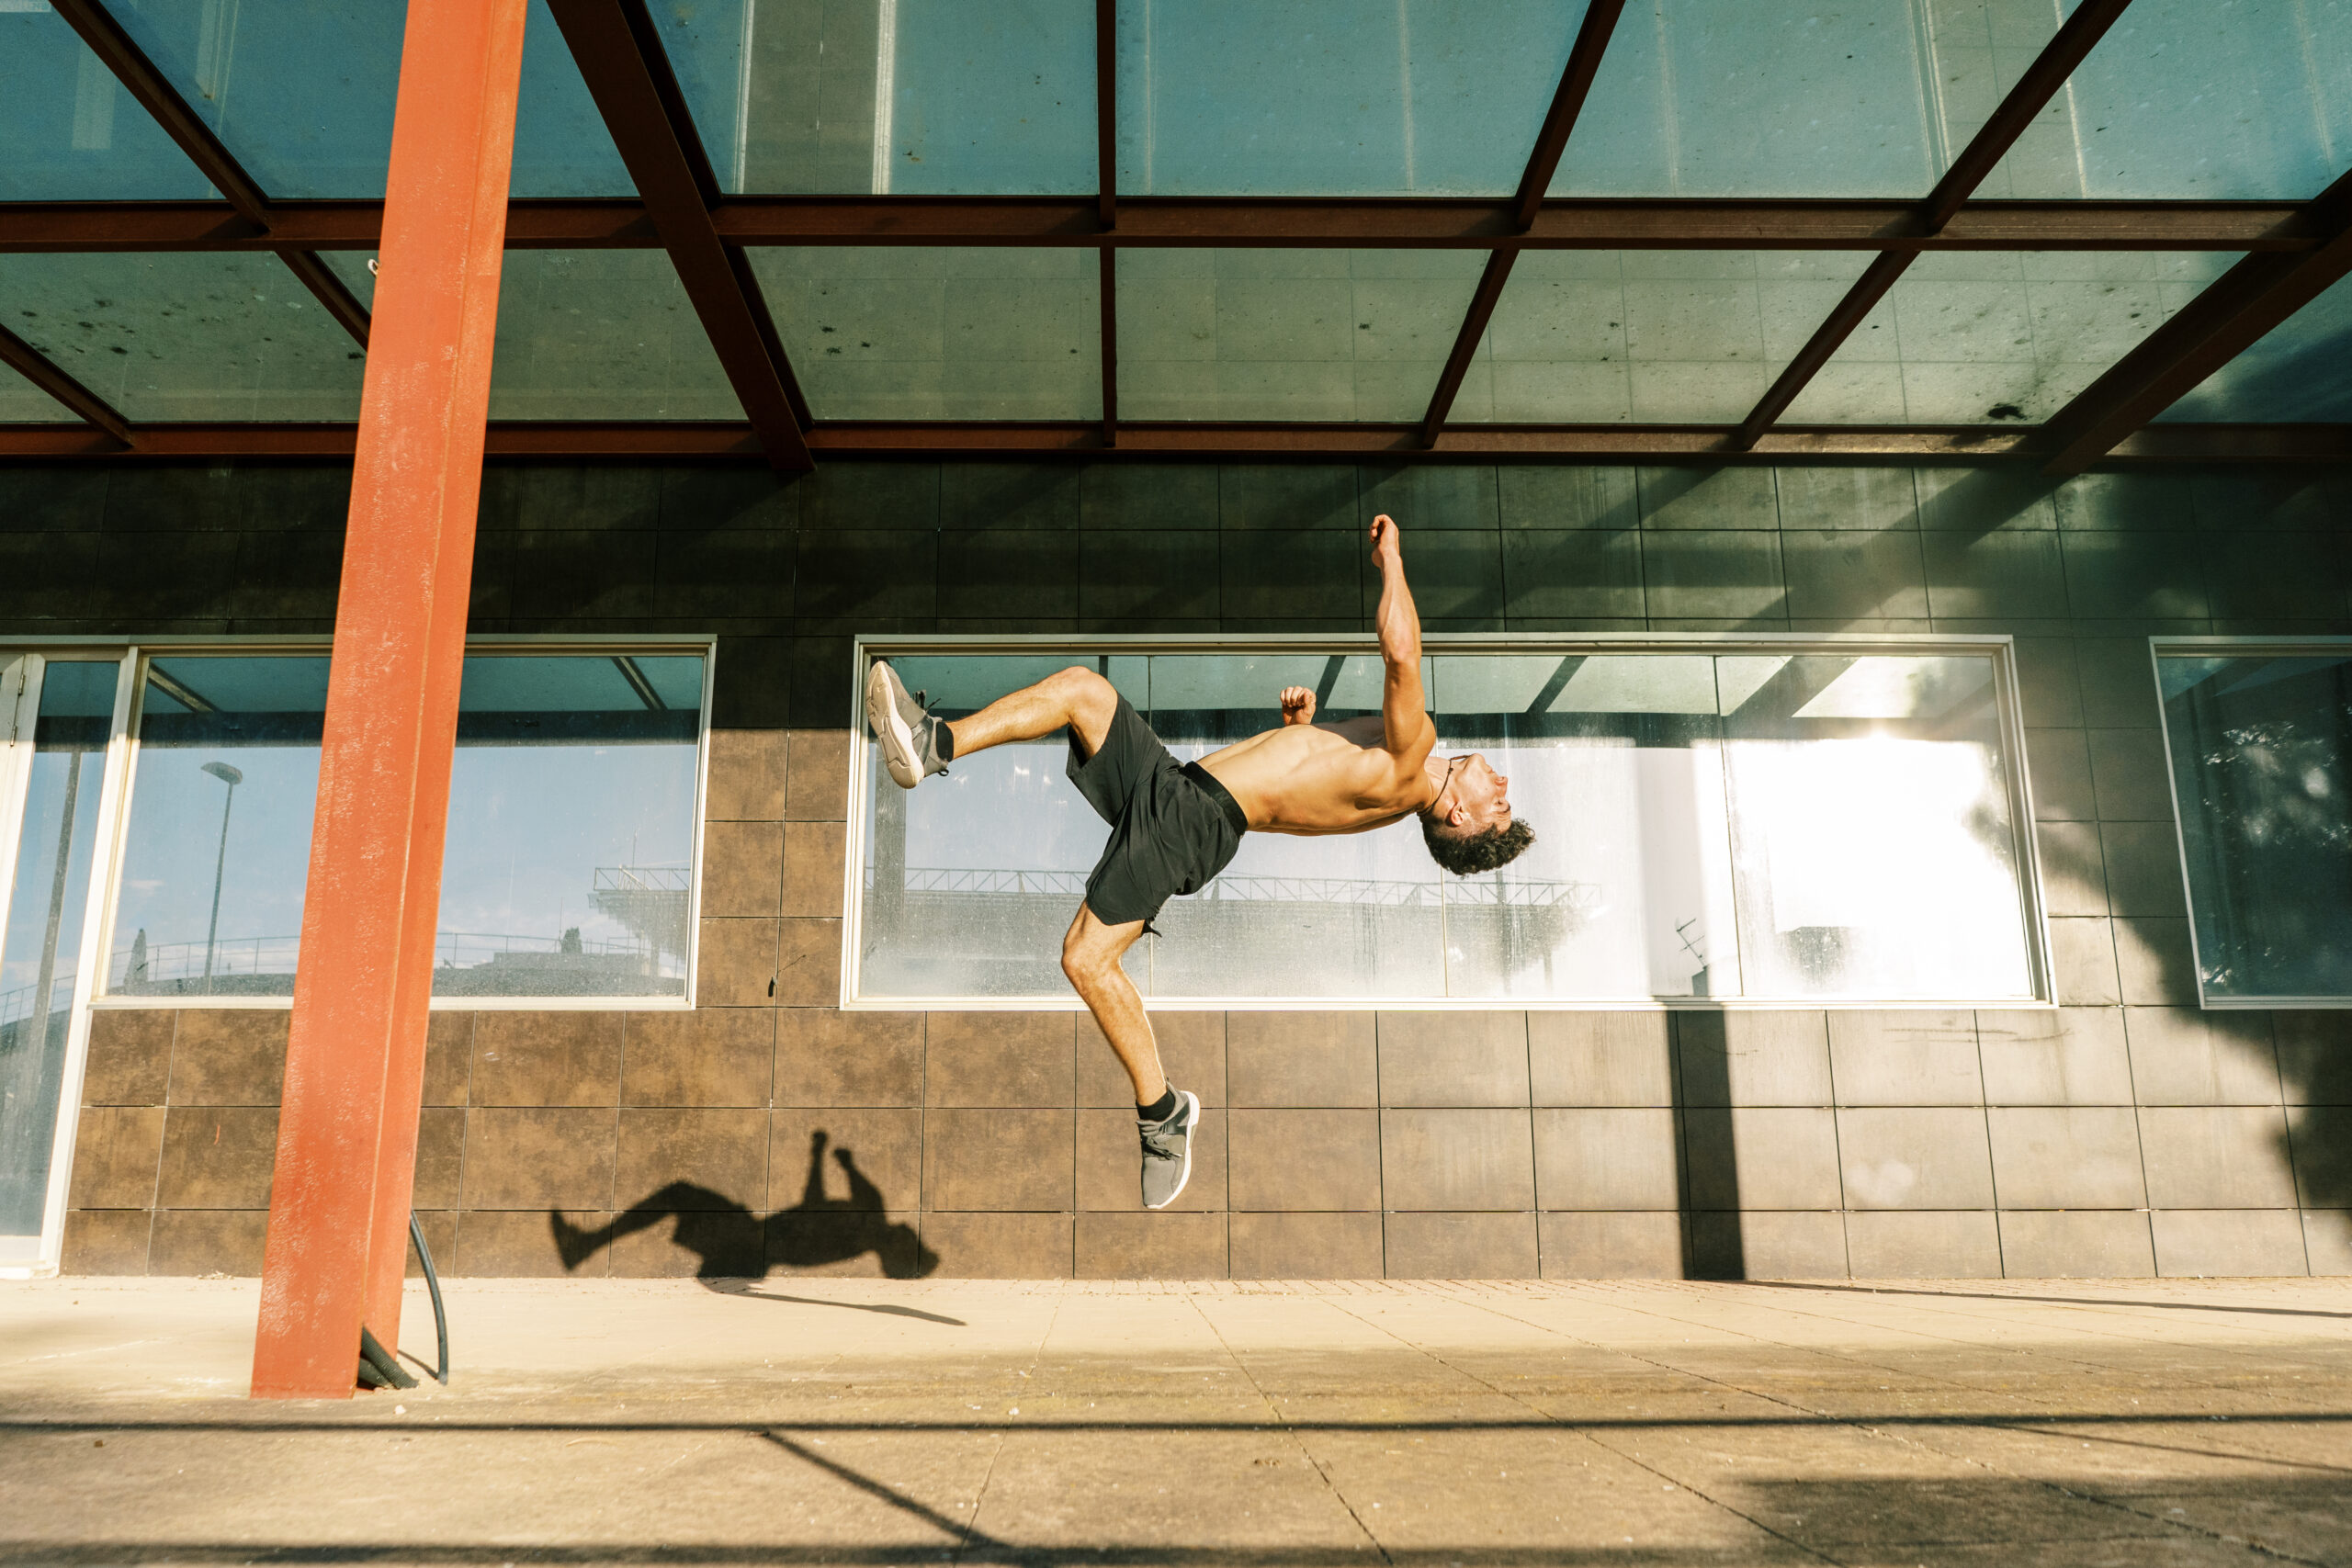 Agile sportsman doing back jump trick on street